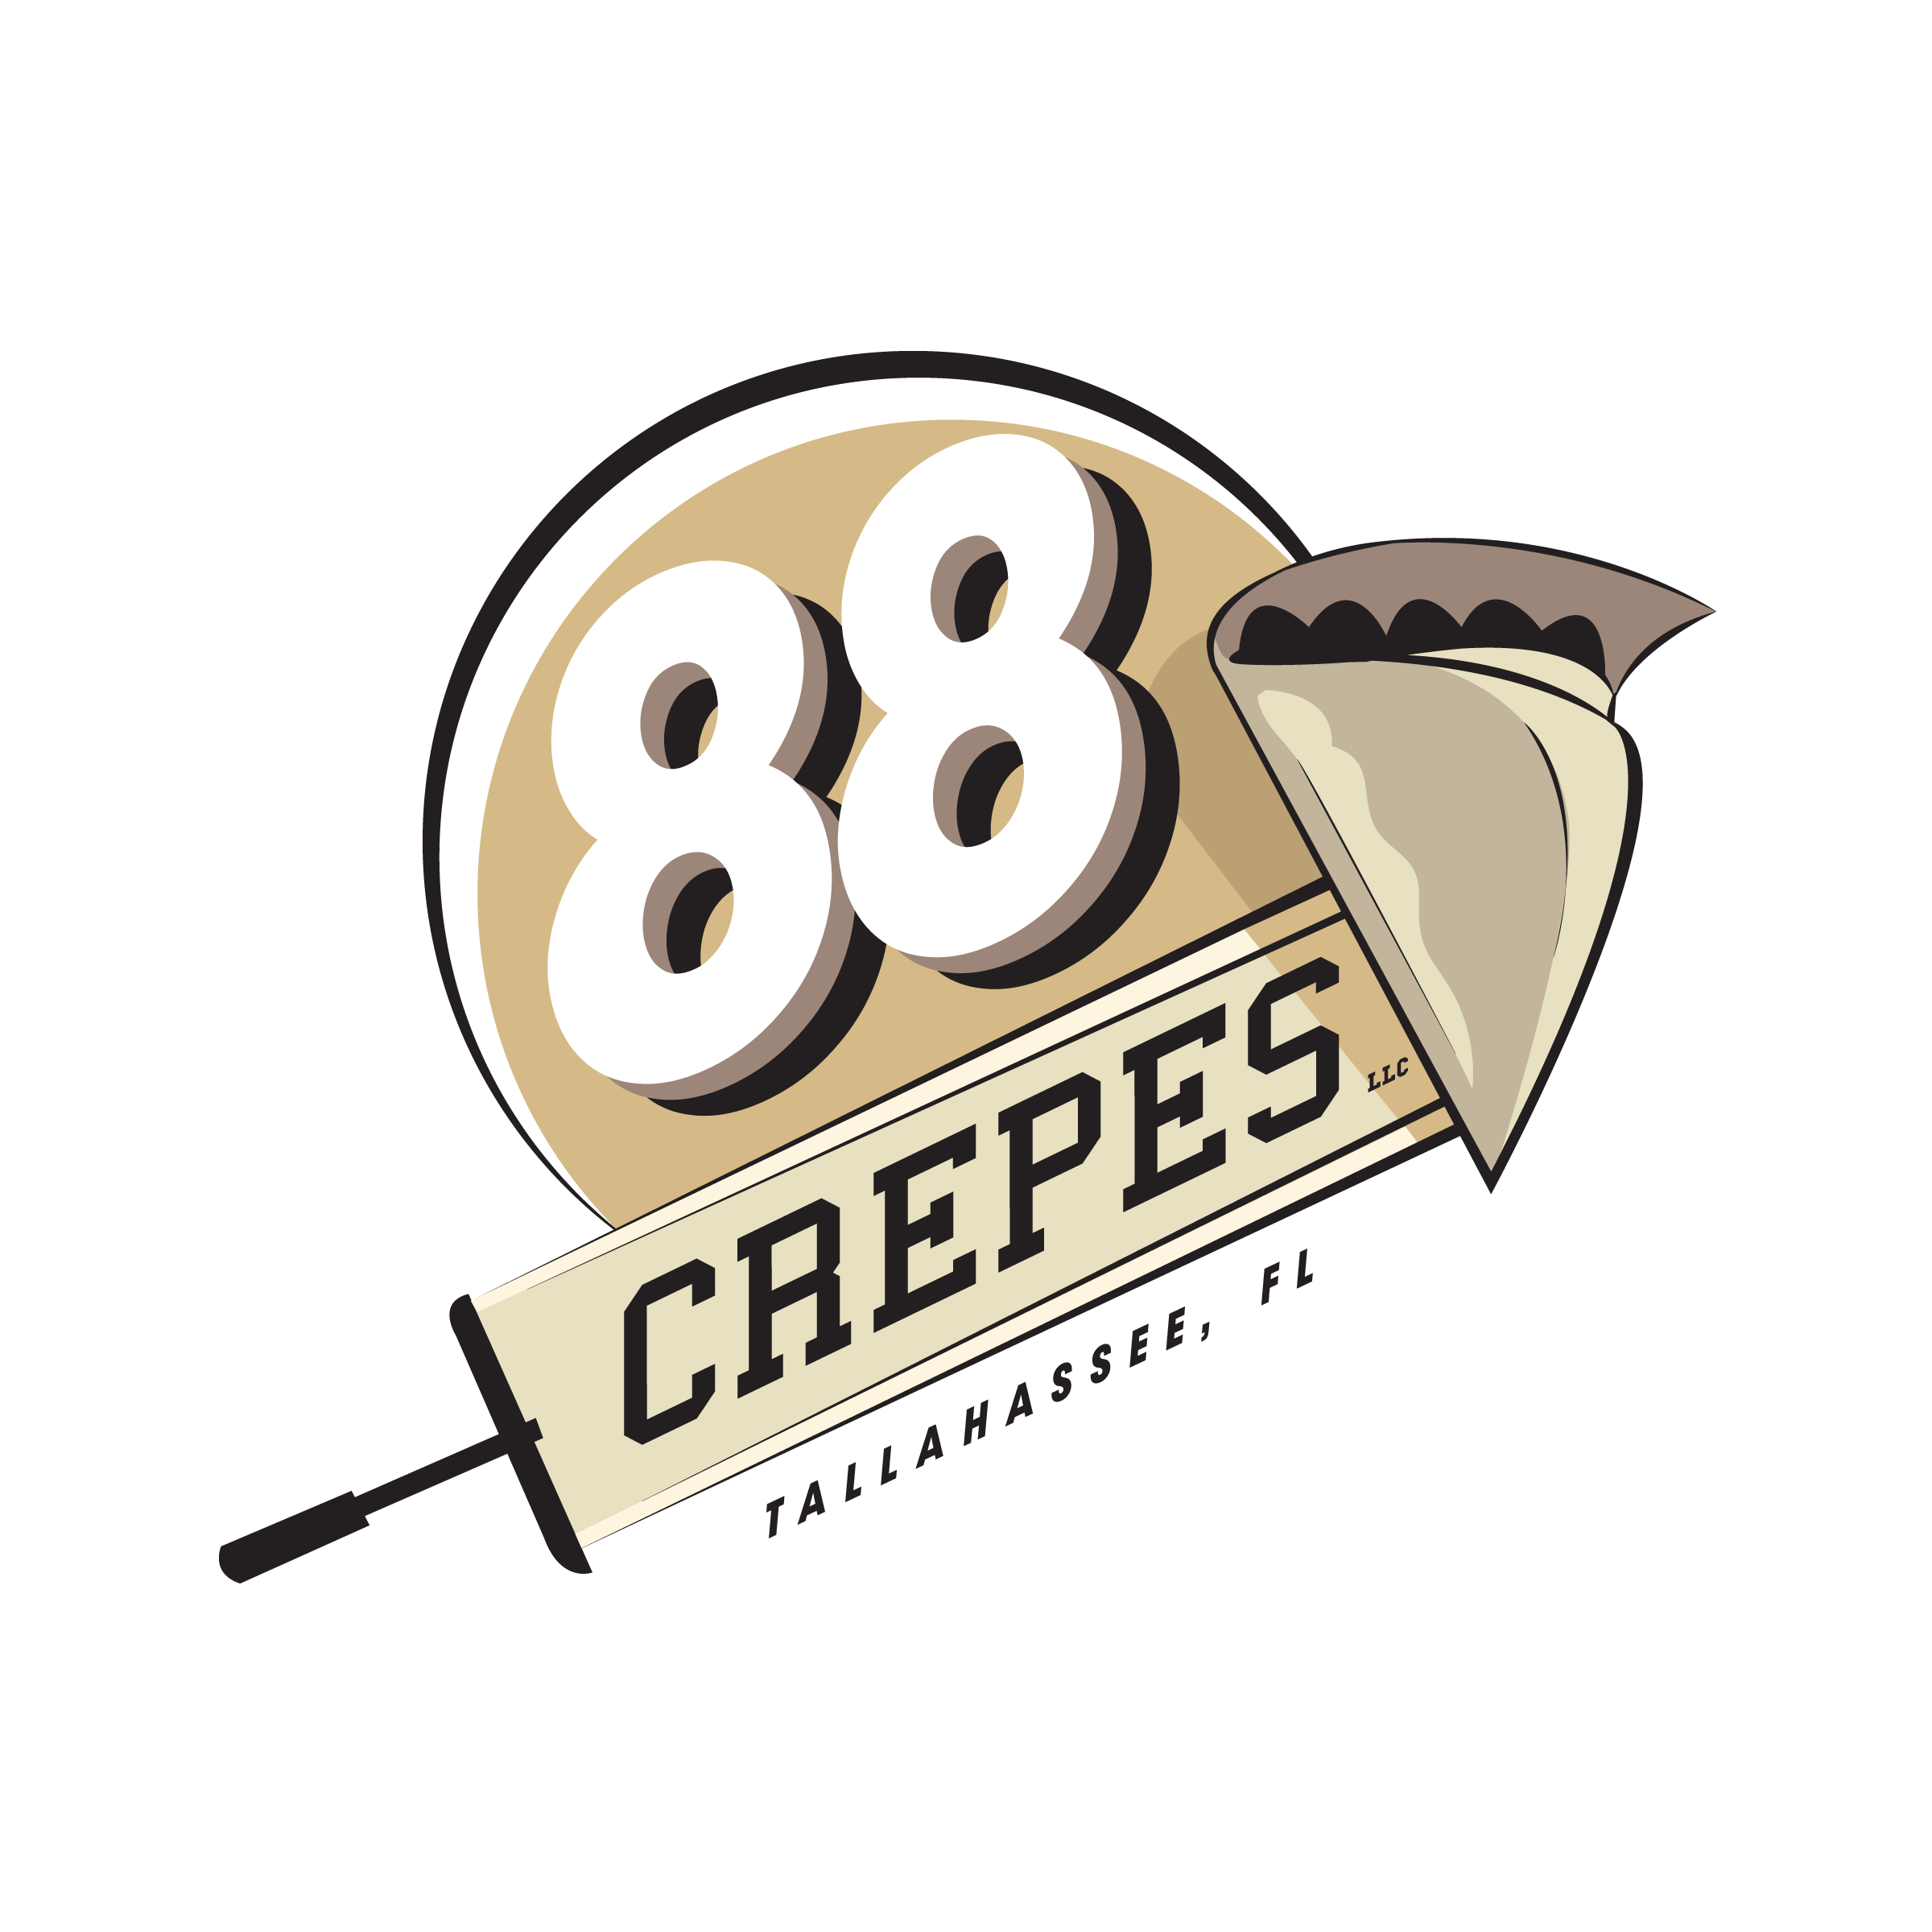 88 Crepes logo